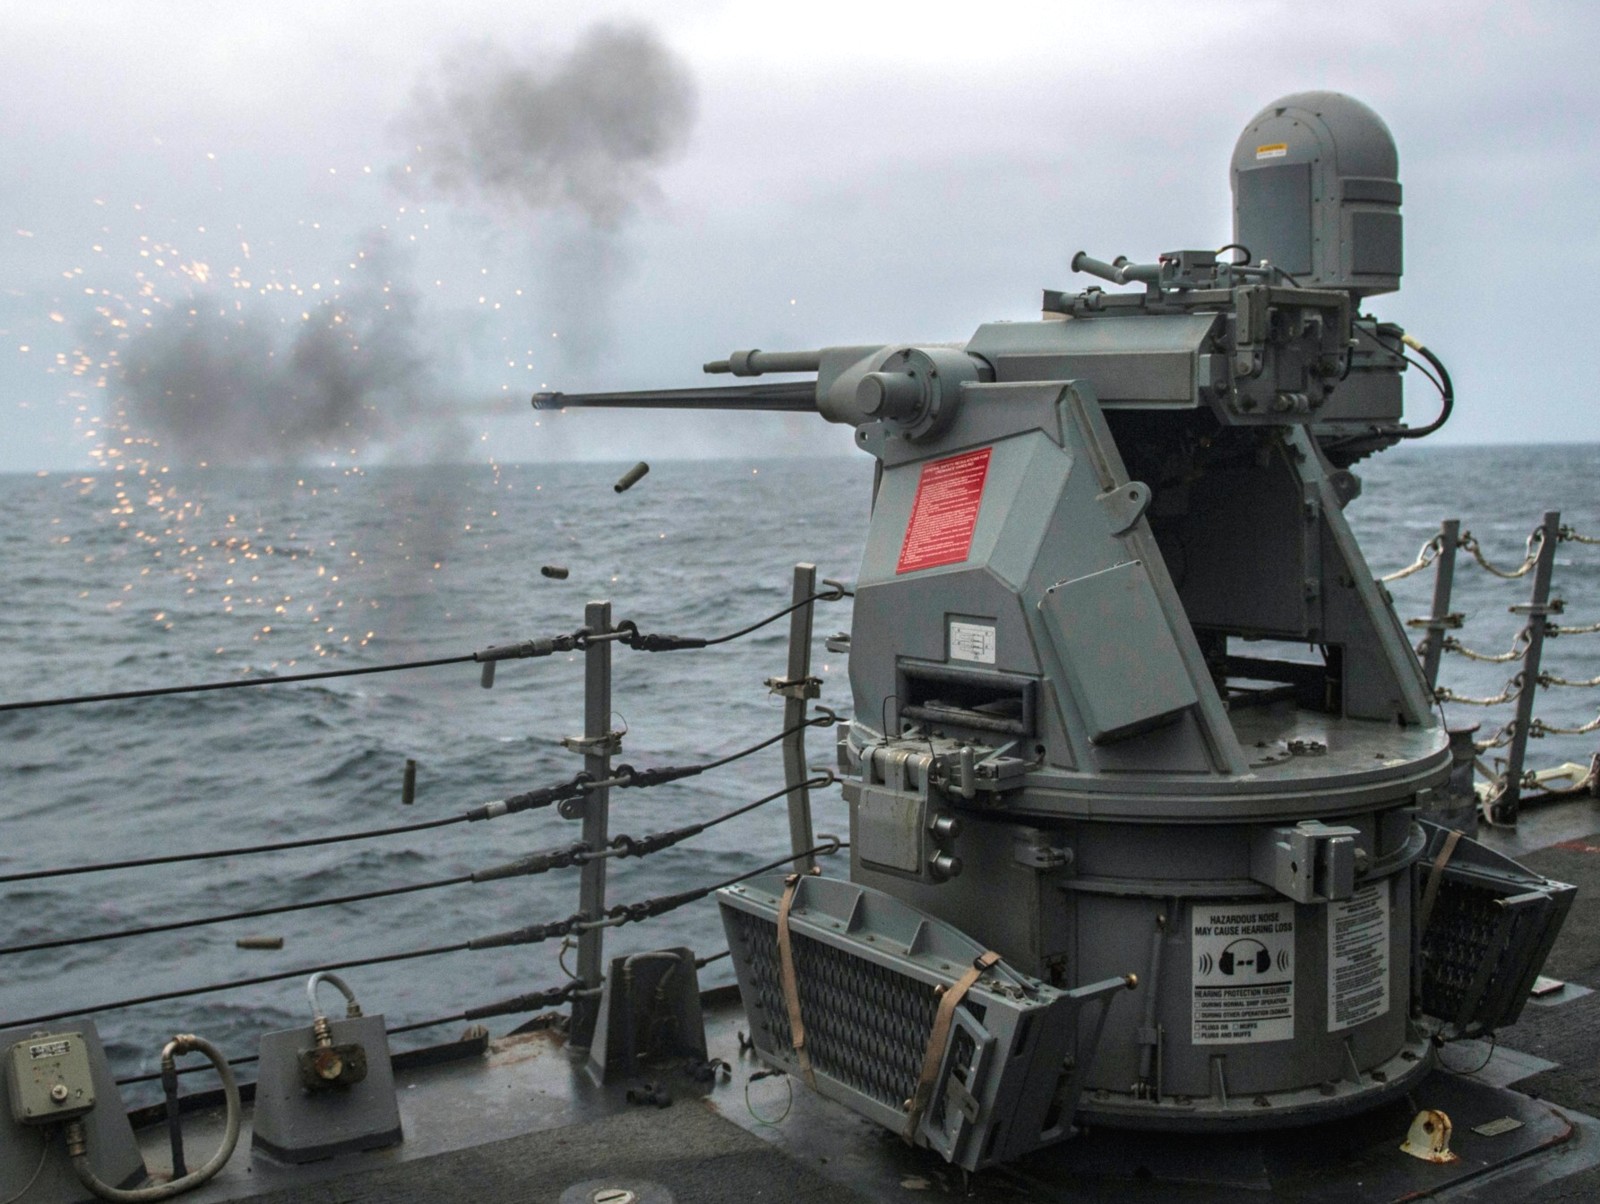 ddg-64 uss carney destroyer arleigh burke class navy 12 mk-38 25mm machine gun